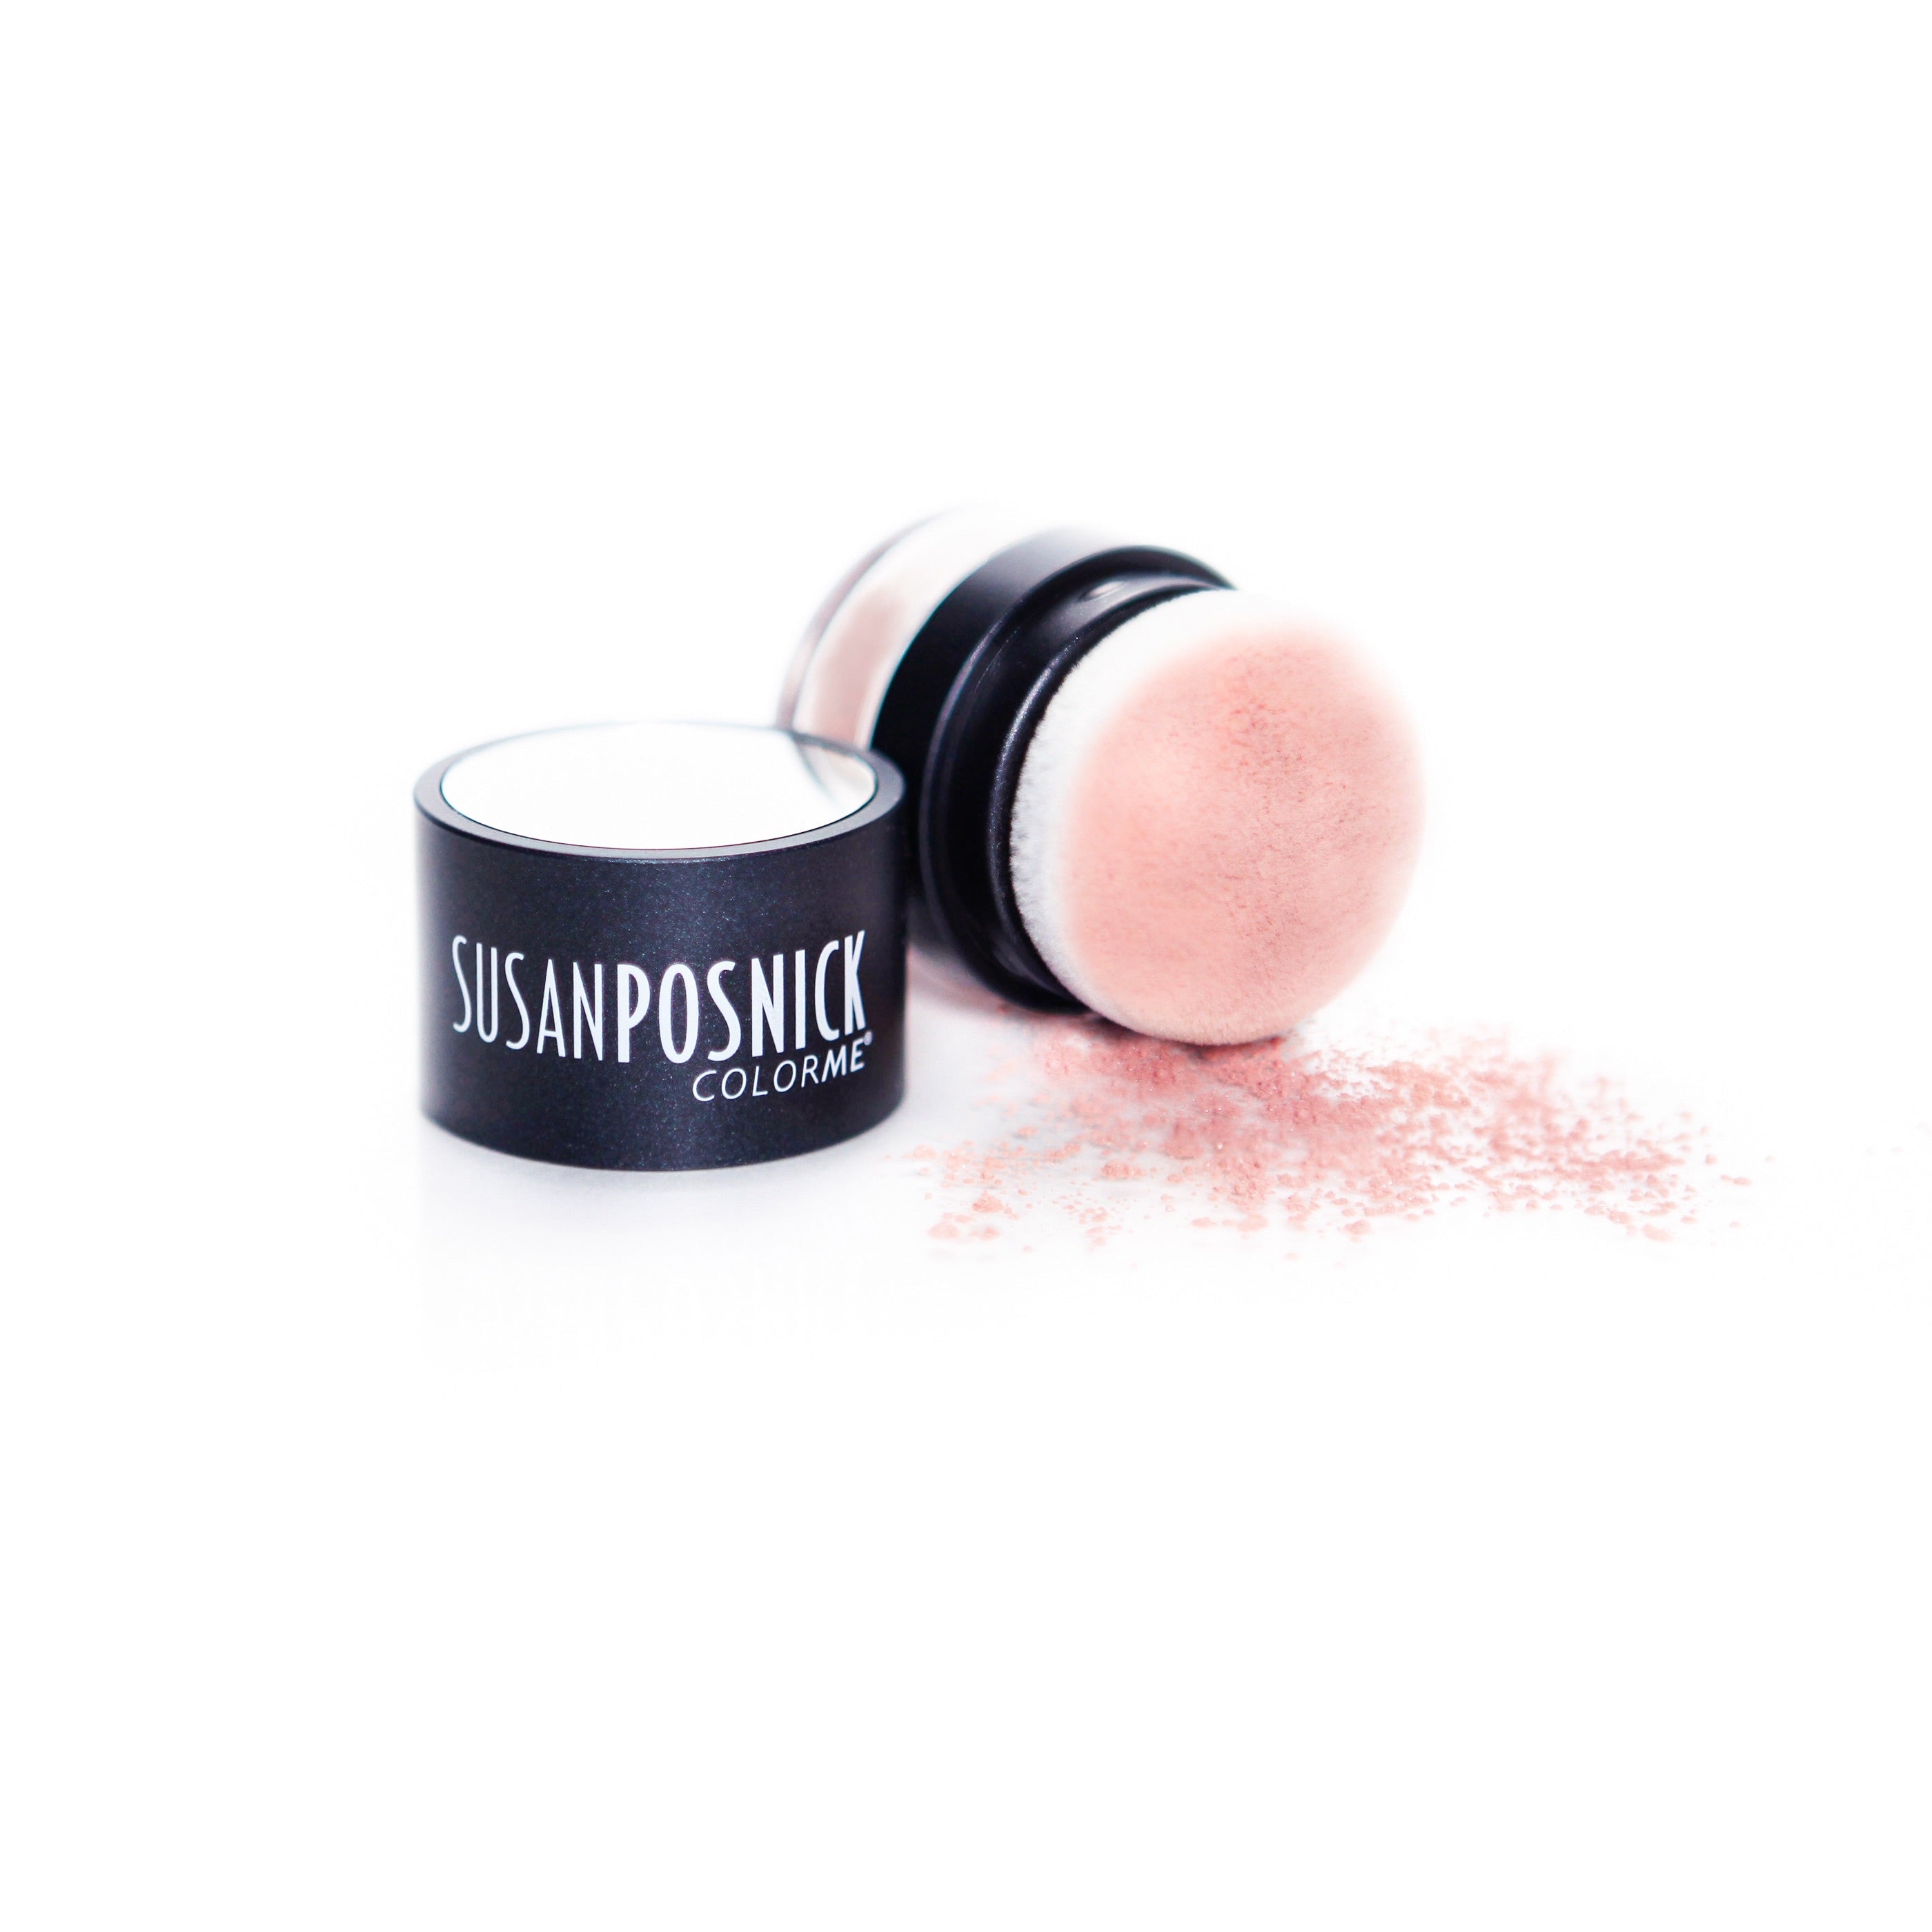 COLORME Mineral Powder Blush, Eyeshadow, Lip Tint &amp; Sun Protection Foundation Susan Posnick Cosmetics 